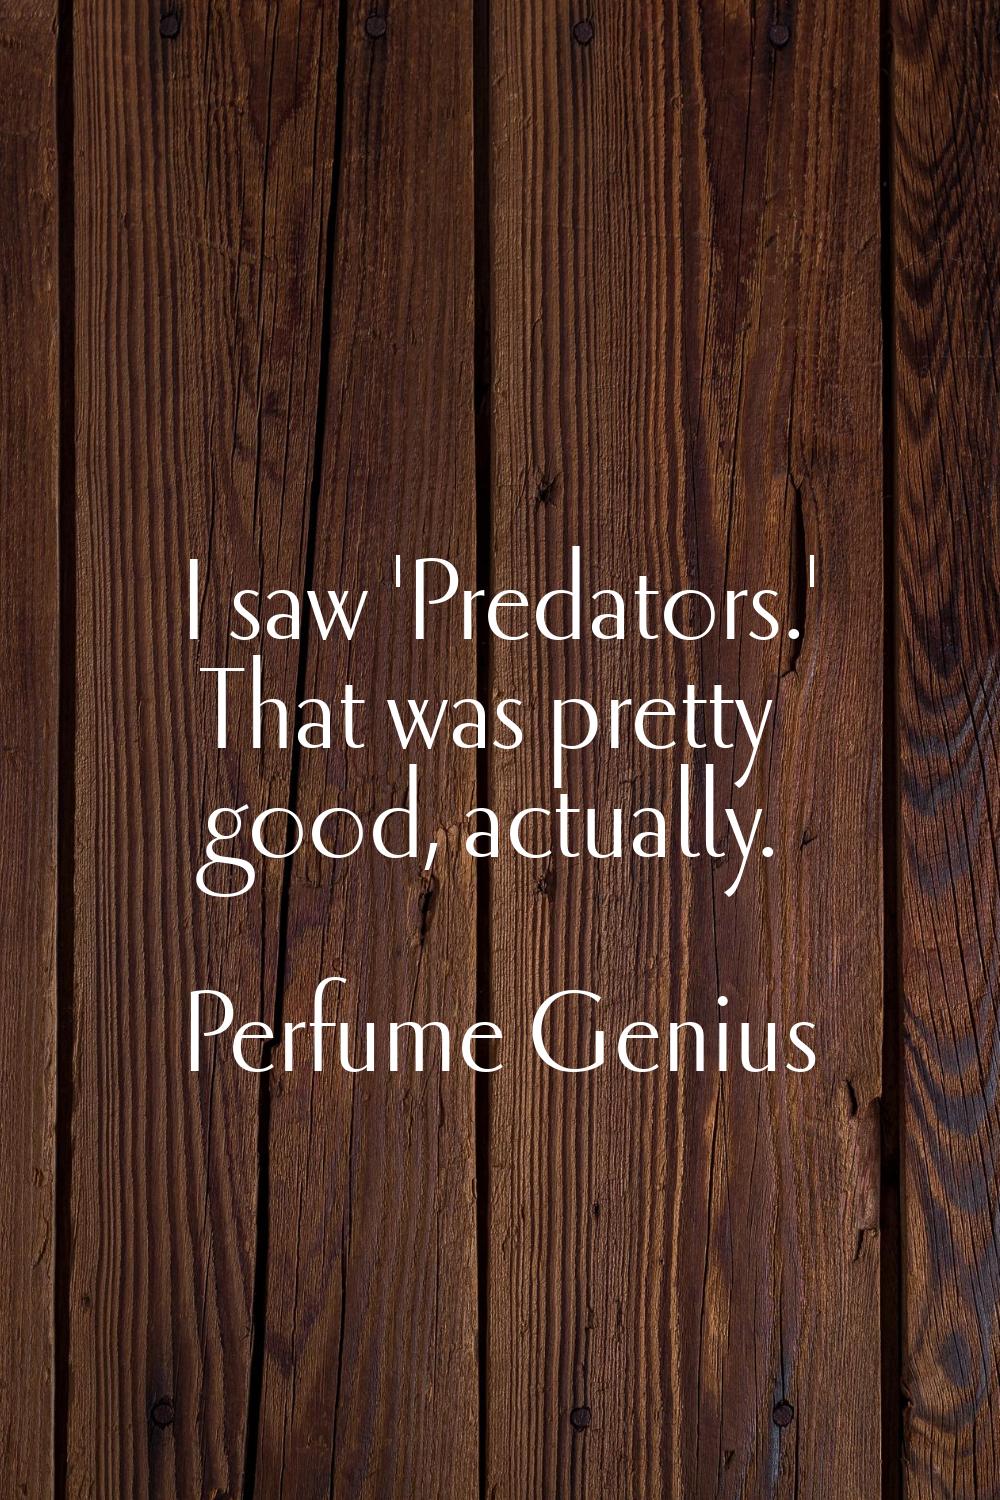 I saw 'Predators.' That was pretty good, actually.